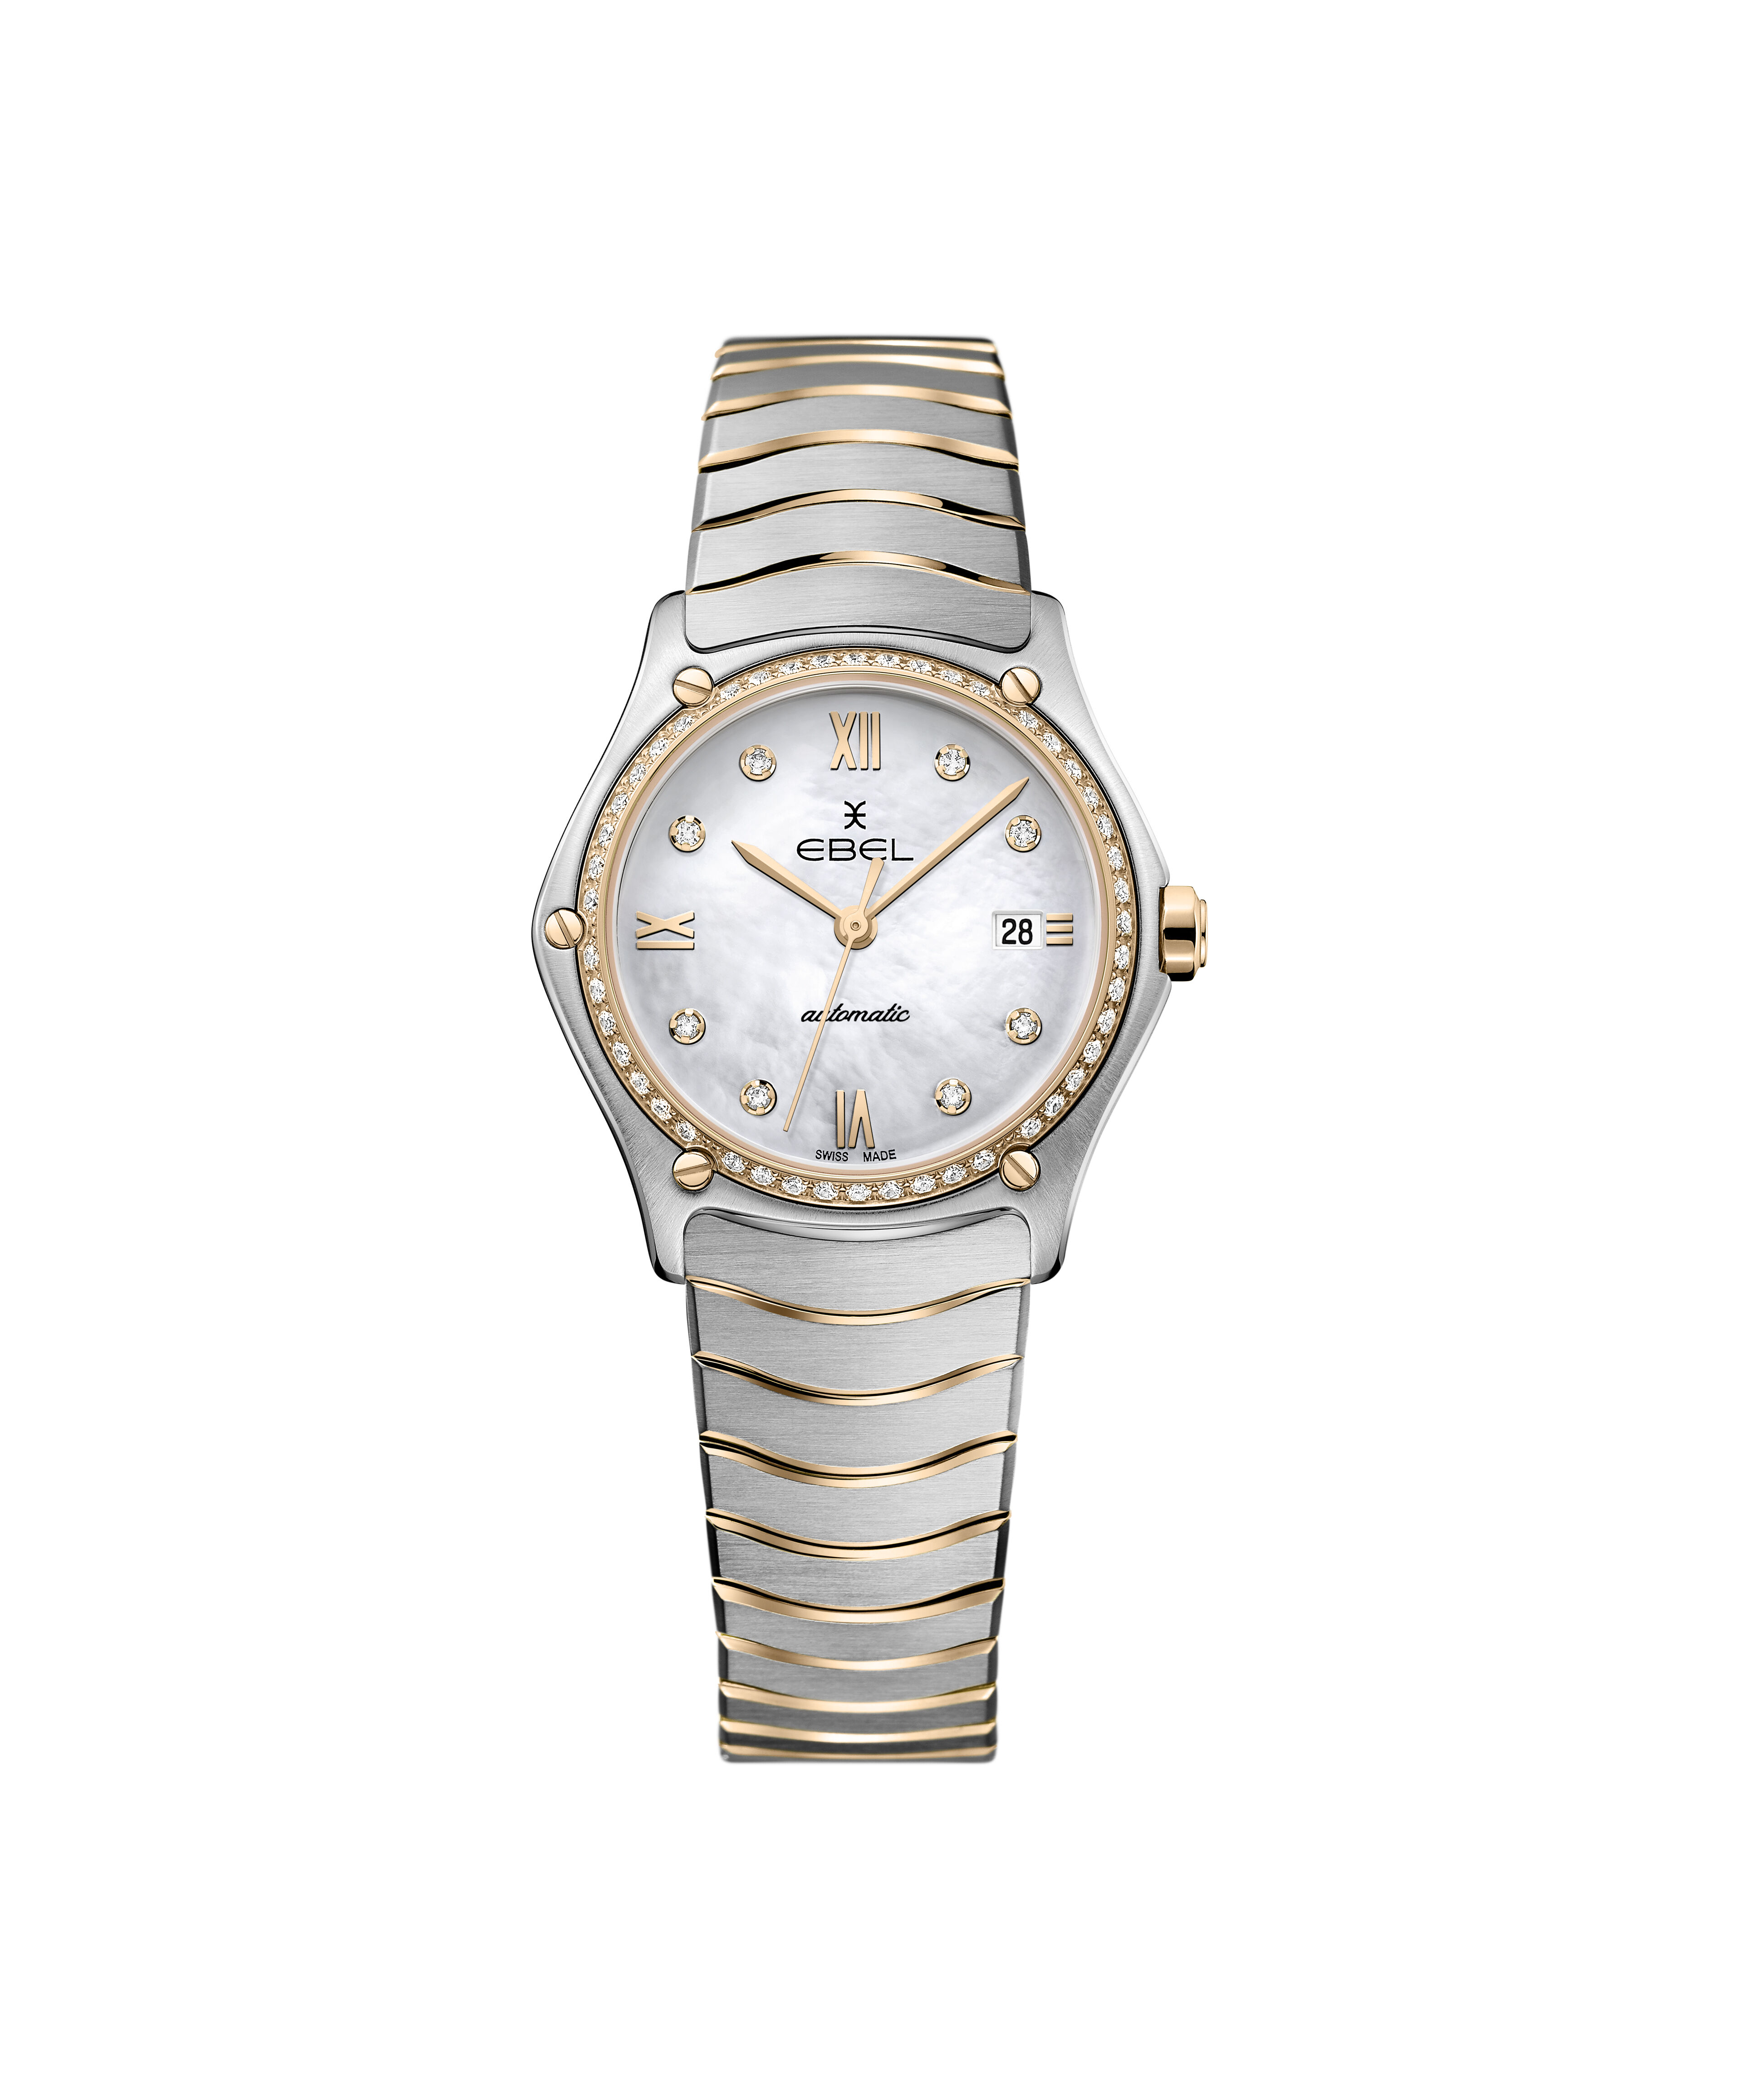 Tiffany Replica Watch